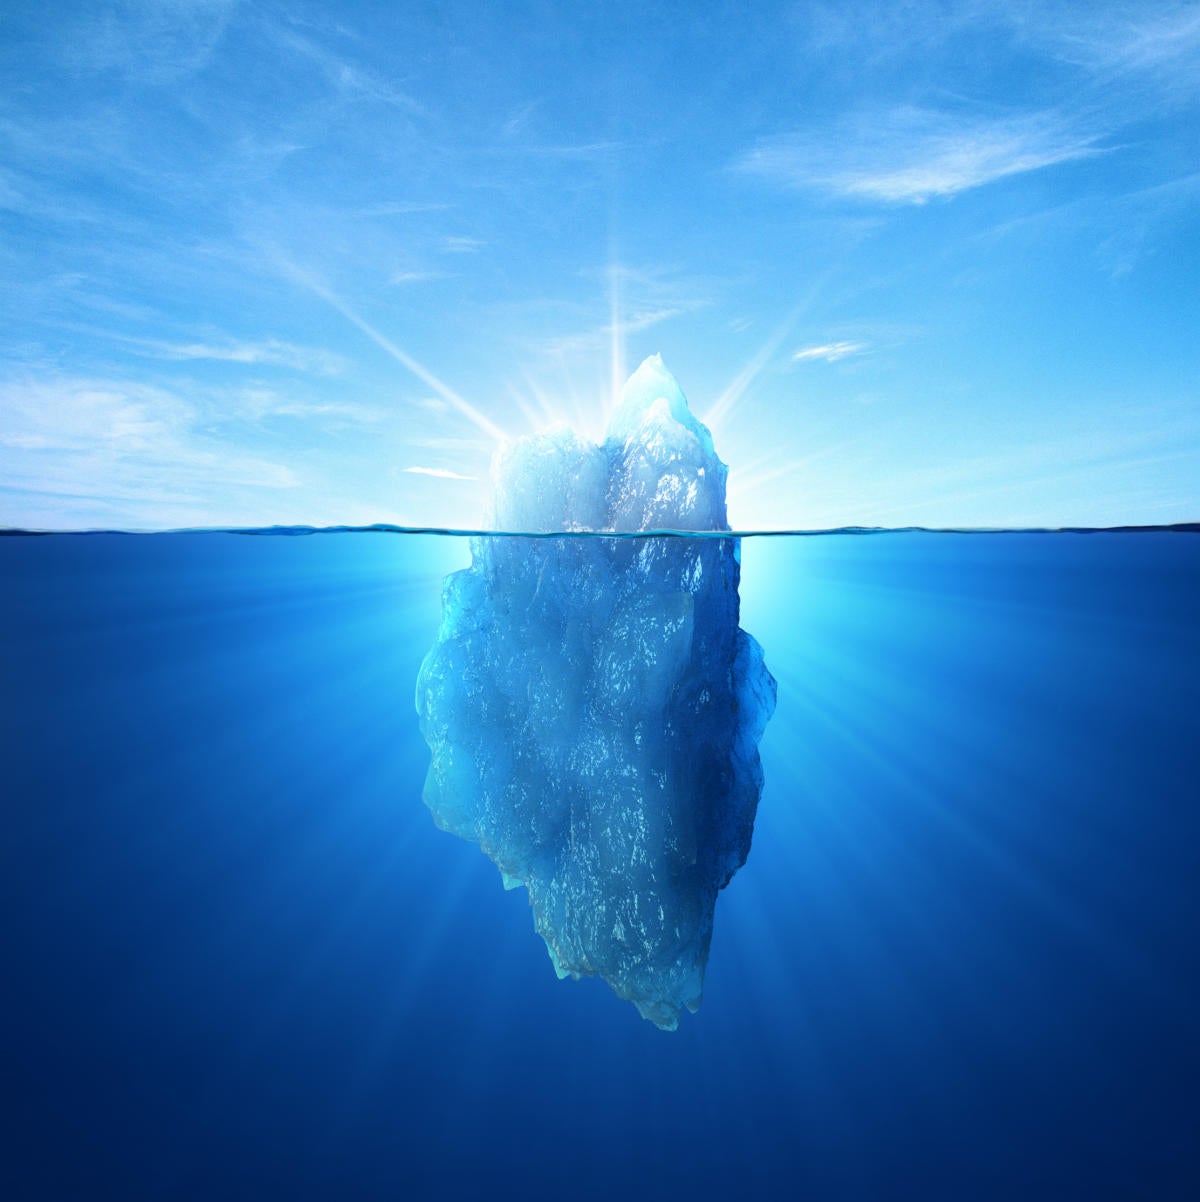 iceberg under water 135415219